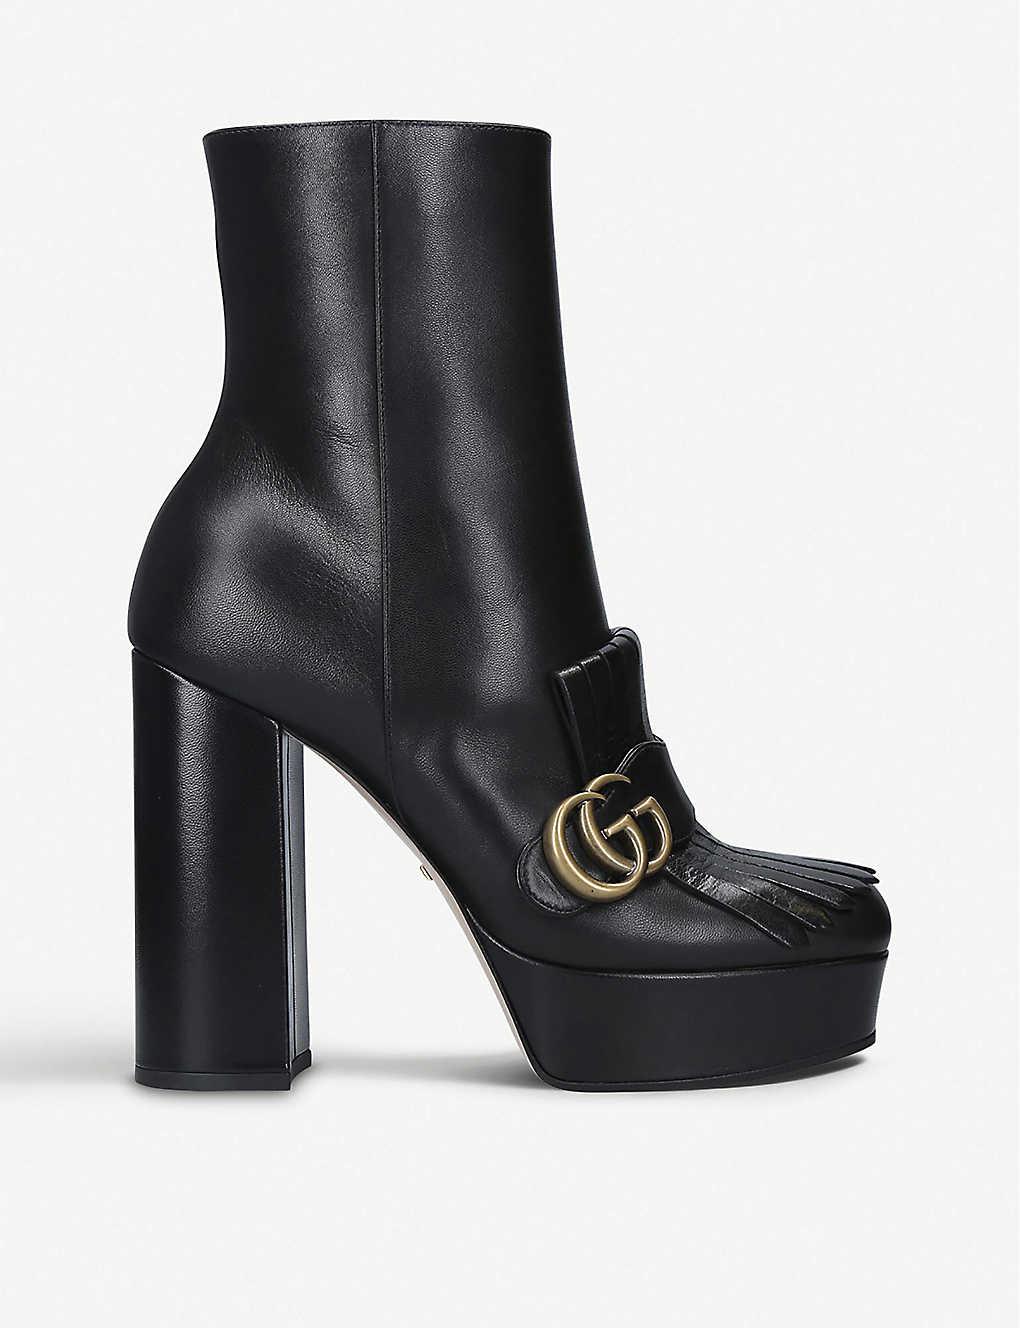 Gucci Fringe Leather Platform Boot in Nero (Black) - Lyst